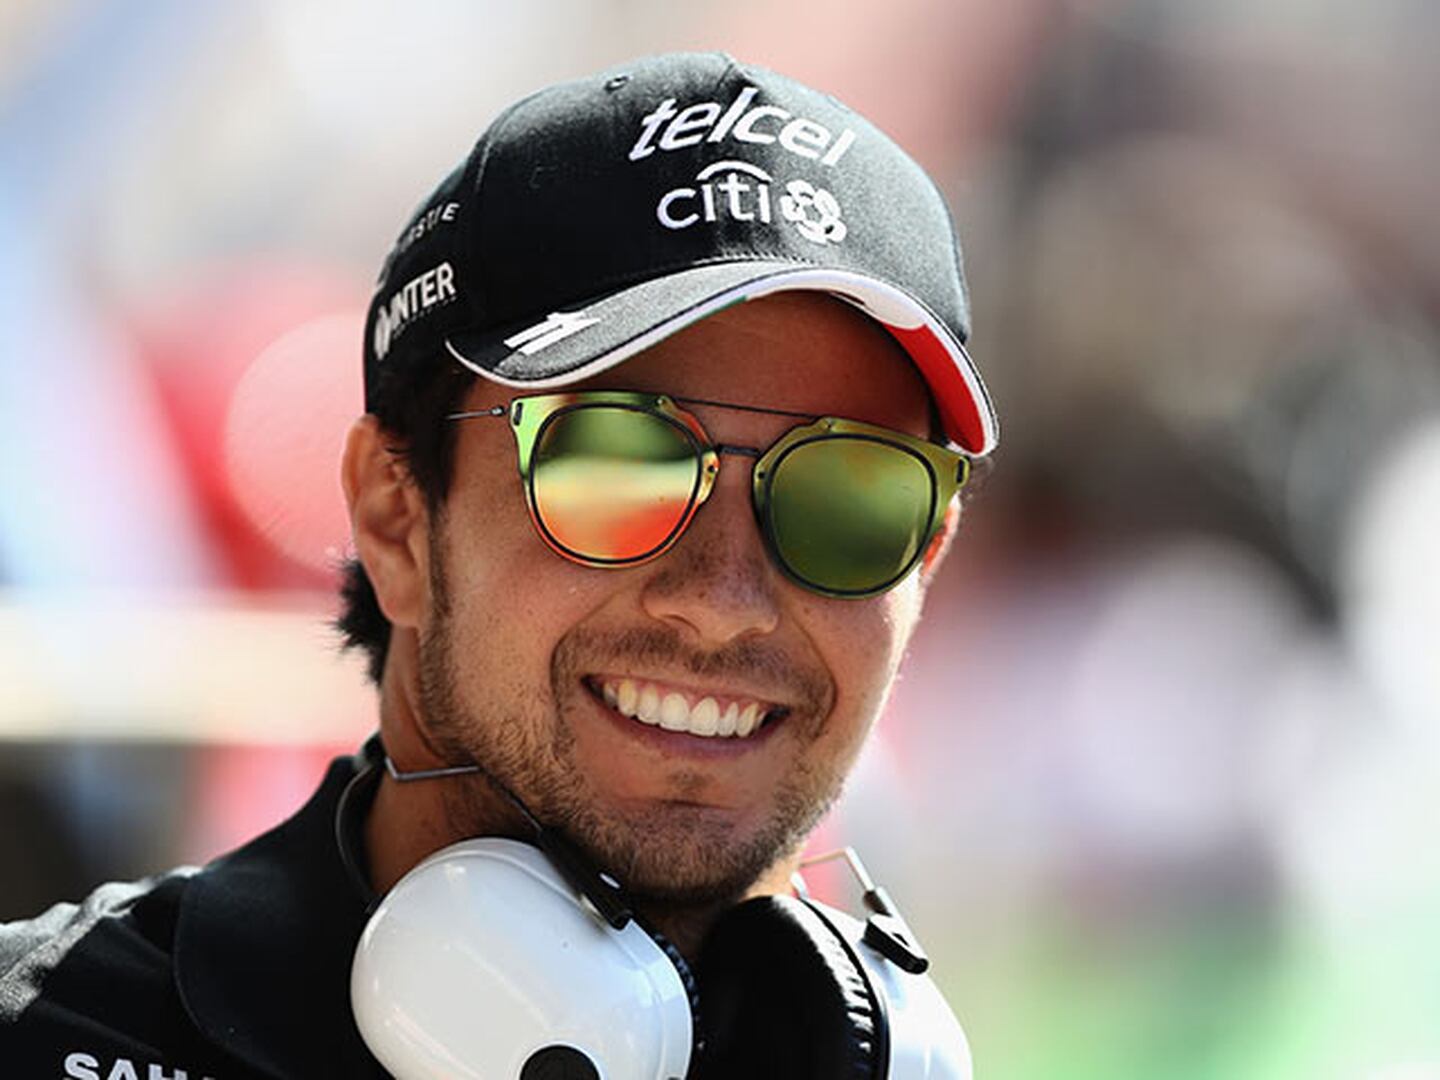 'Checo' Pérez revela por qué se divertirá mucho en Silverstone